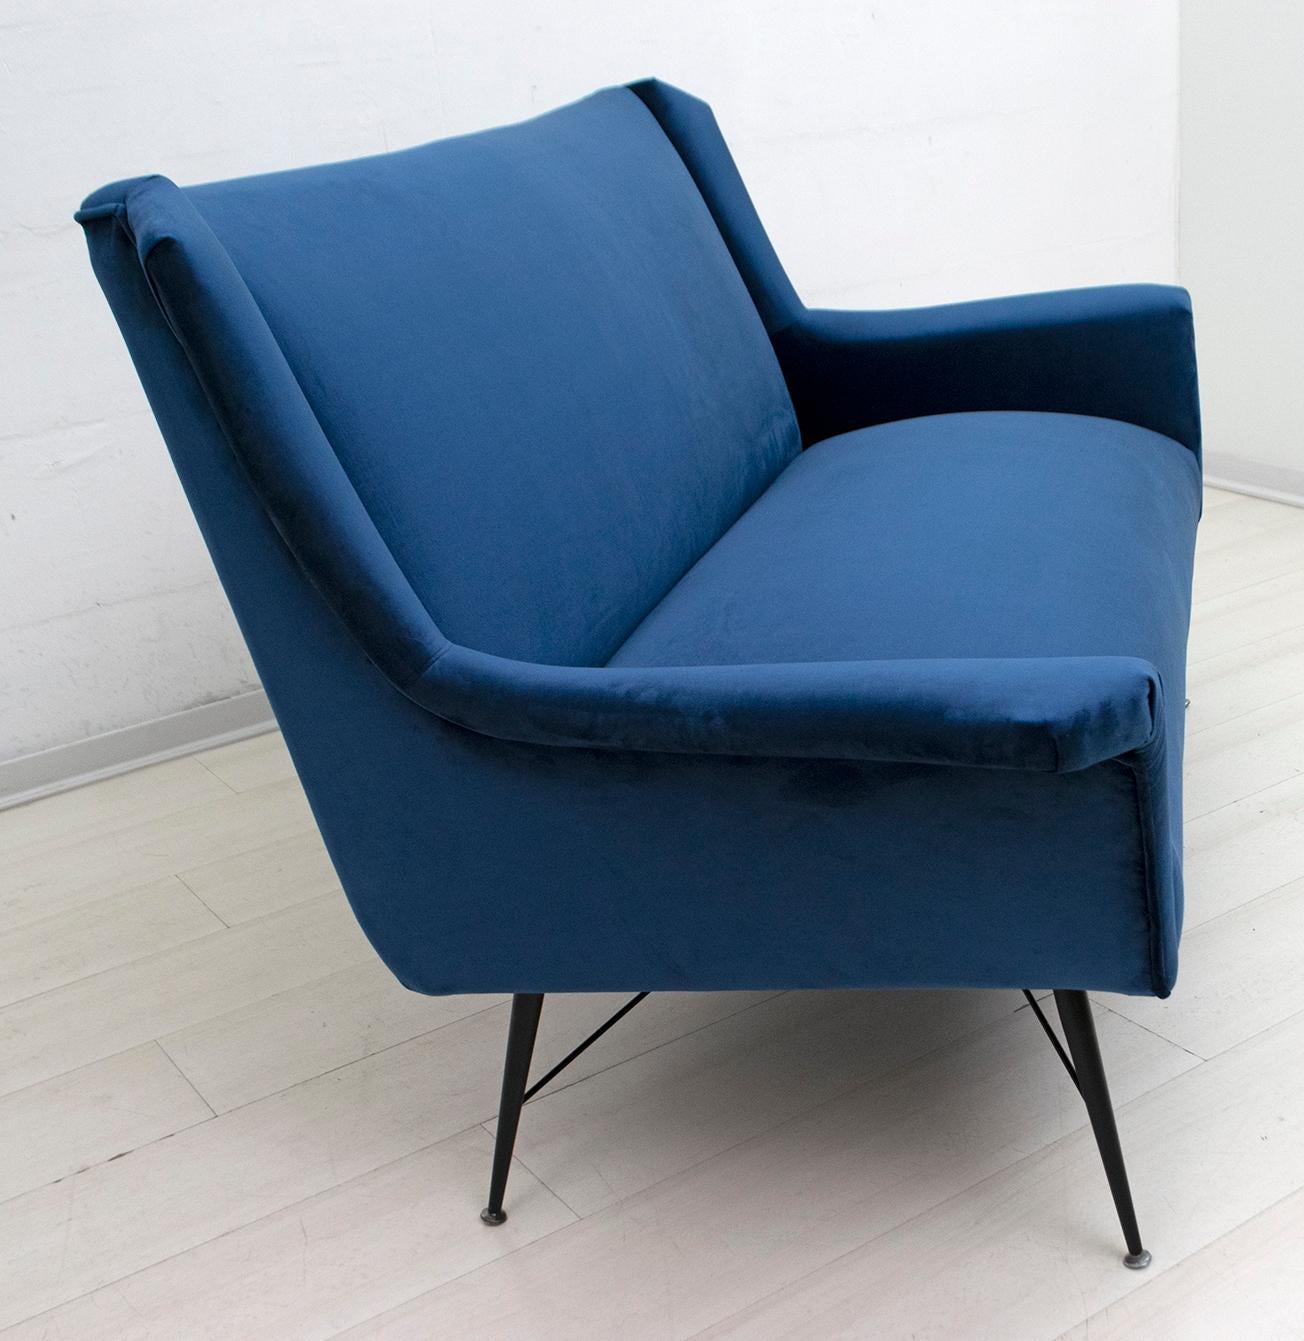 Mid-20th Century Gigi Radice Mid-Century Modern Italian Sofa for Minotti, 1950s For Sale